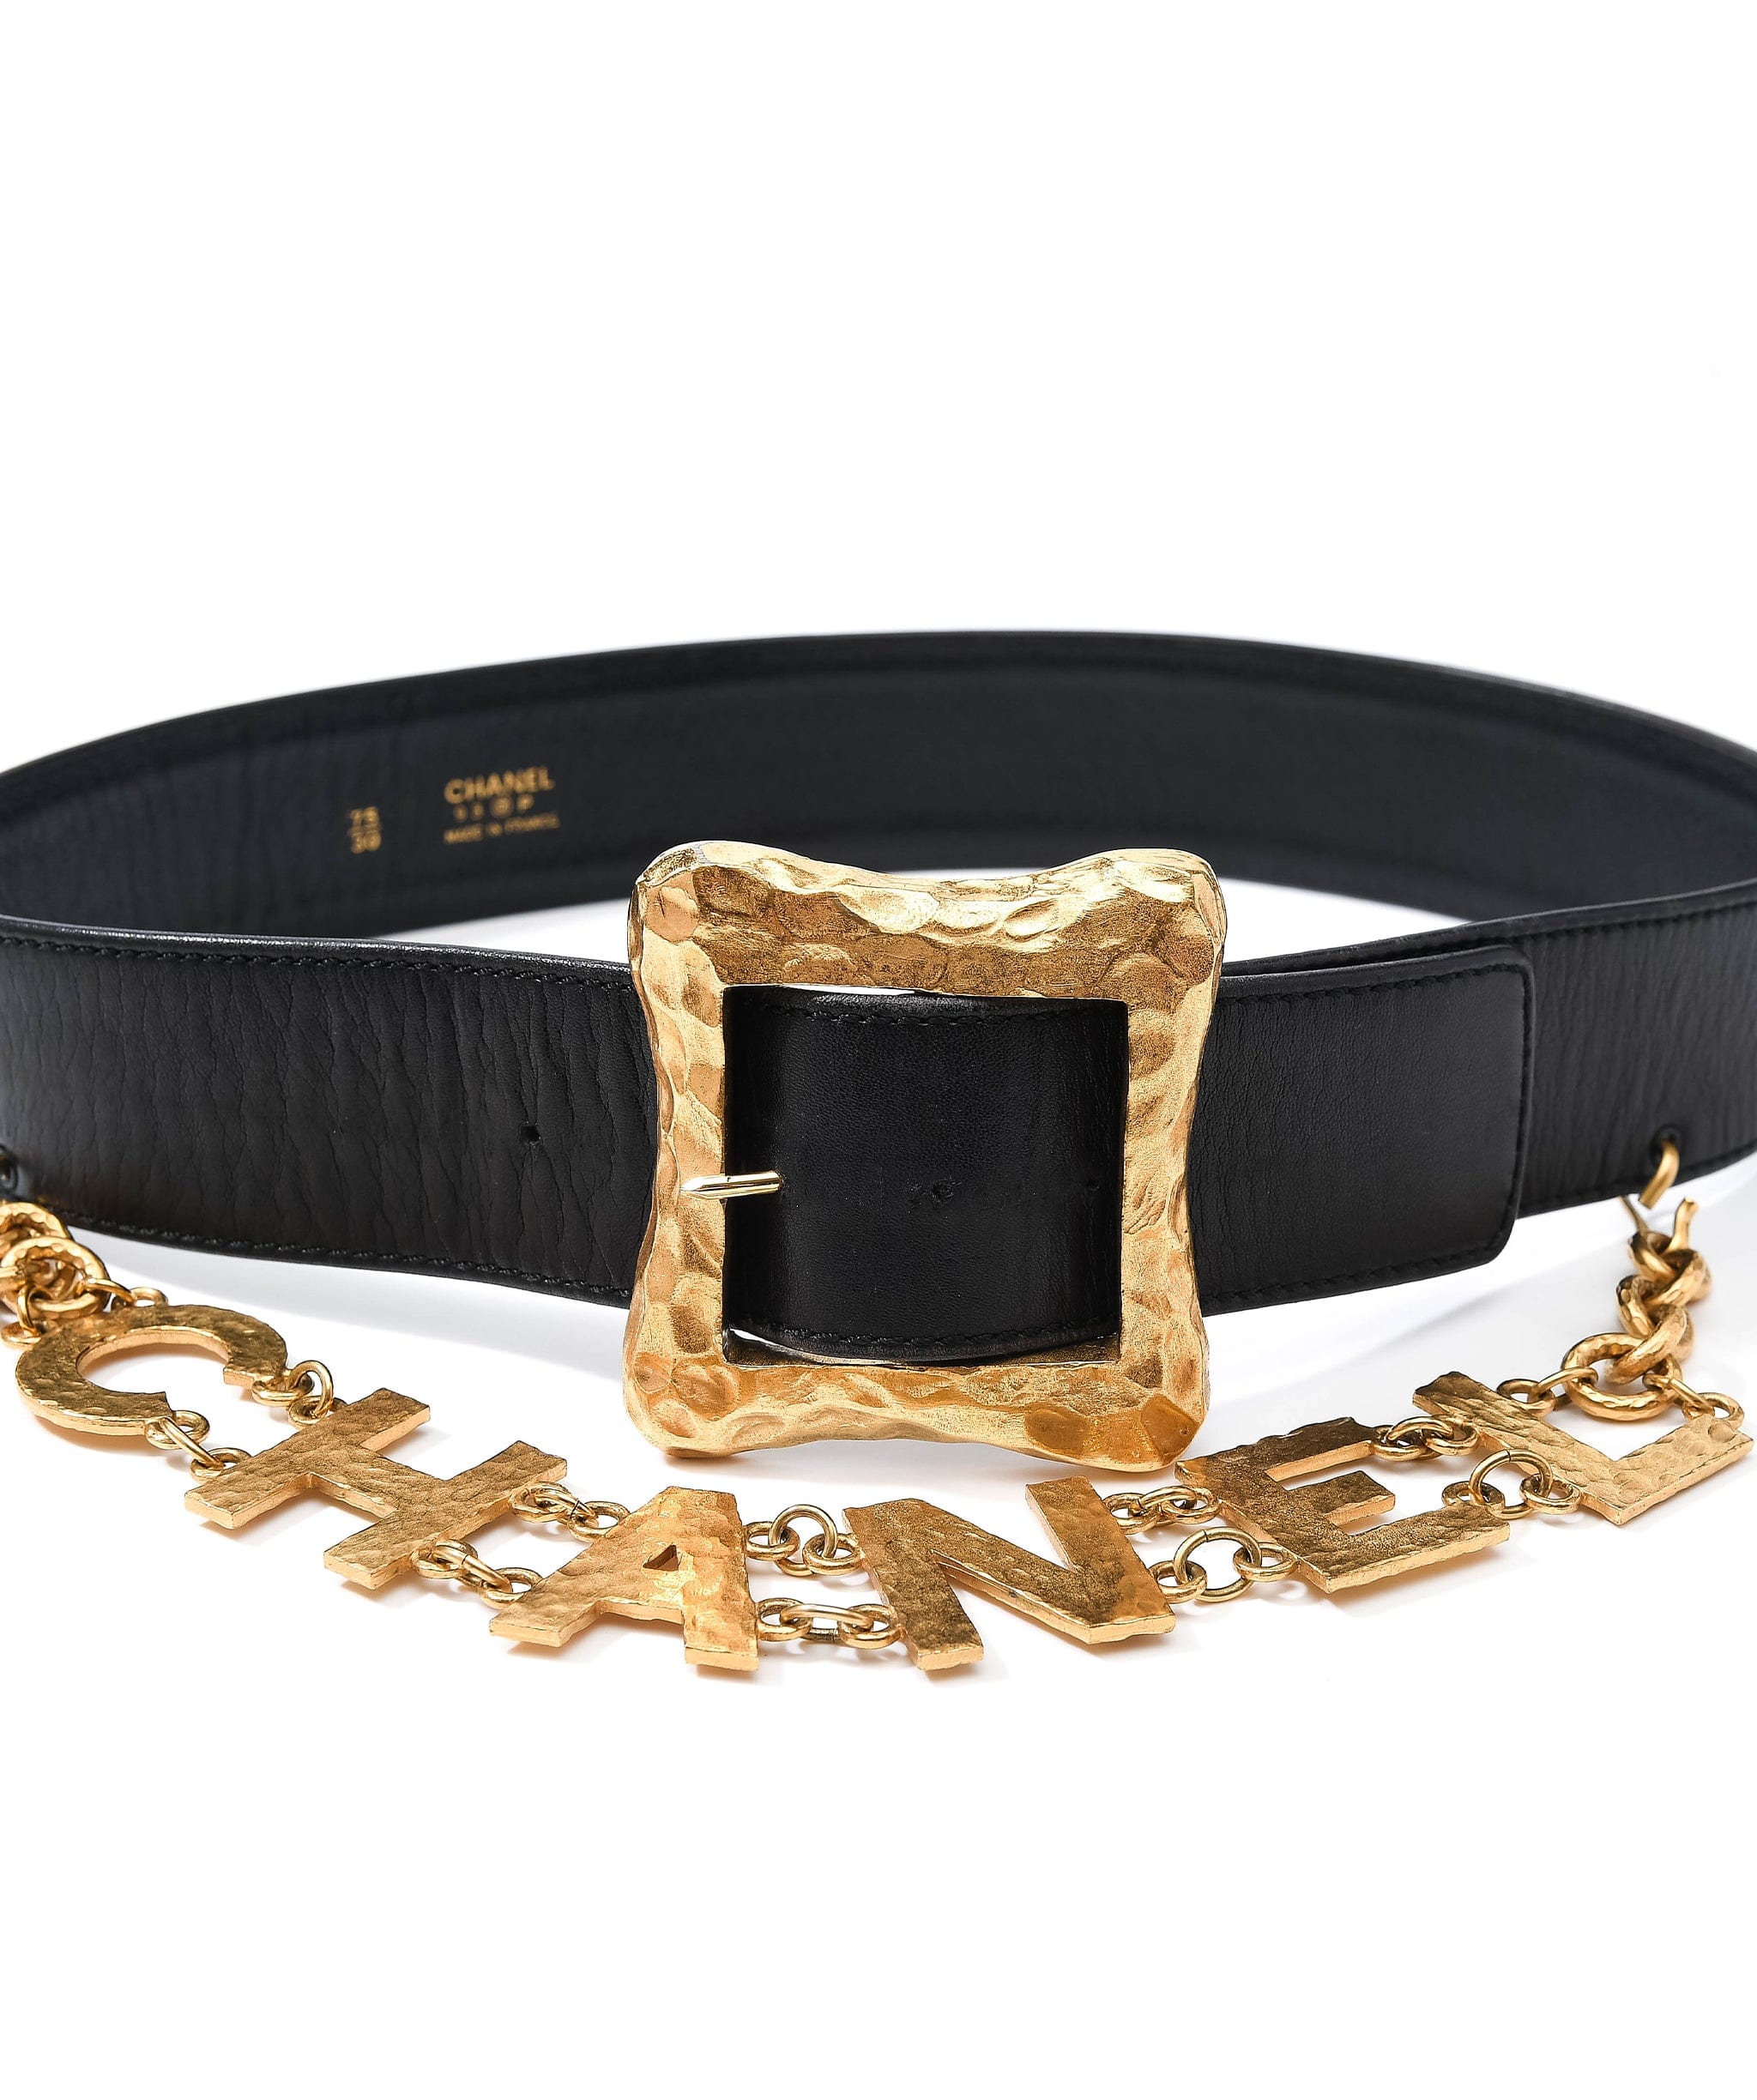 Chanel Chanel Belt KRS1003